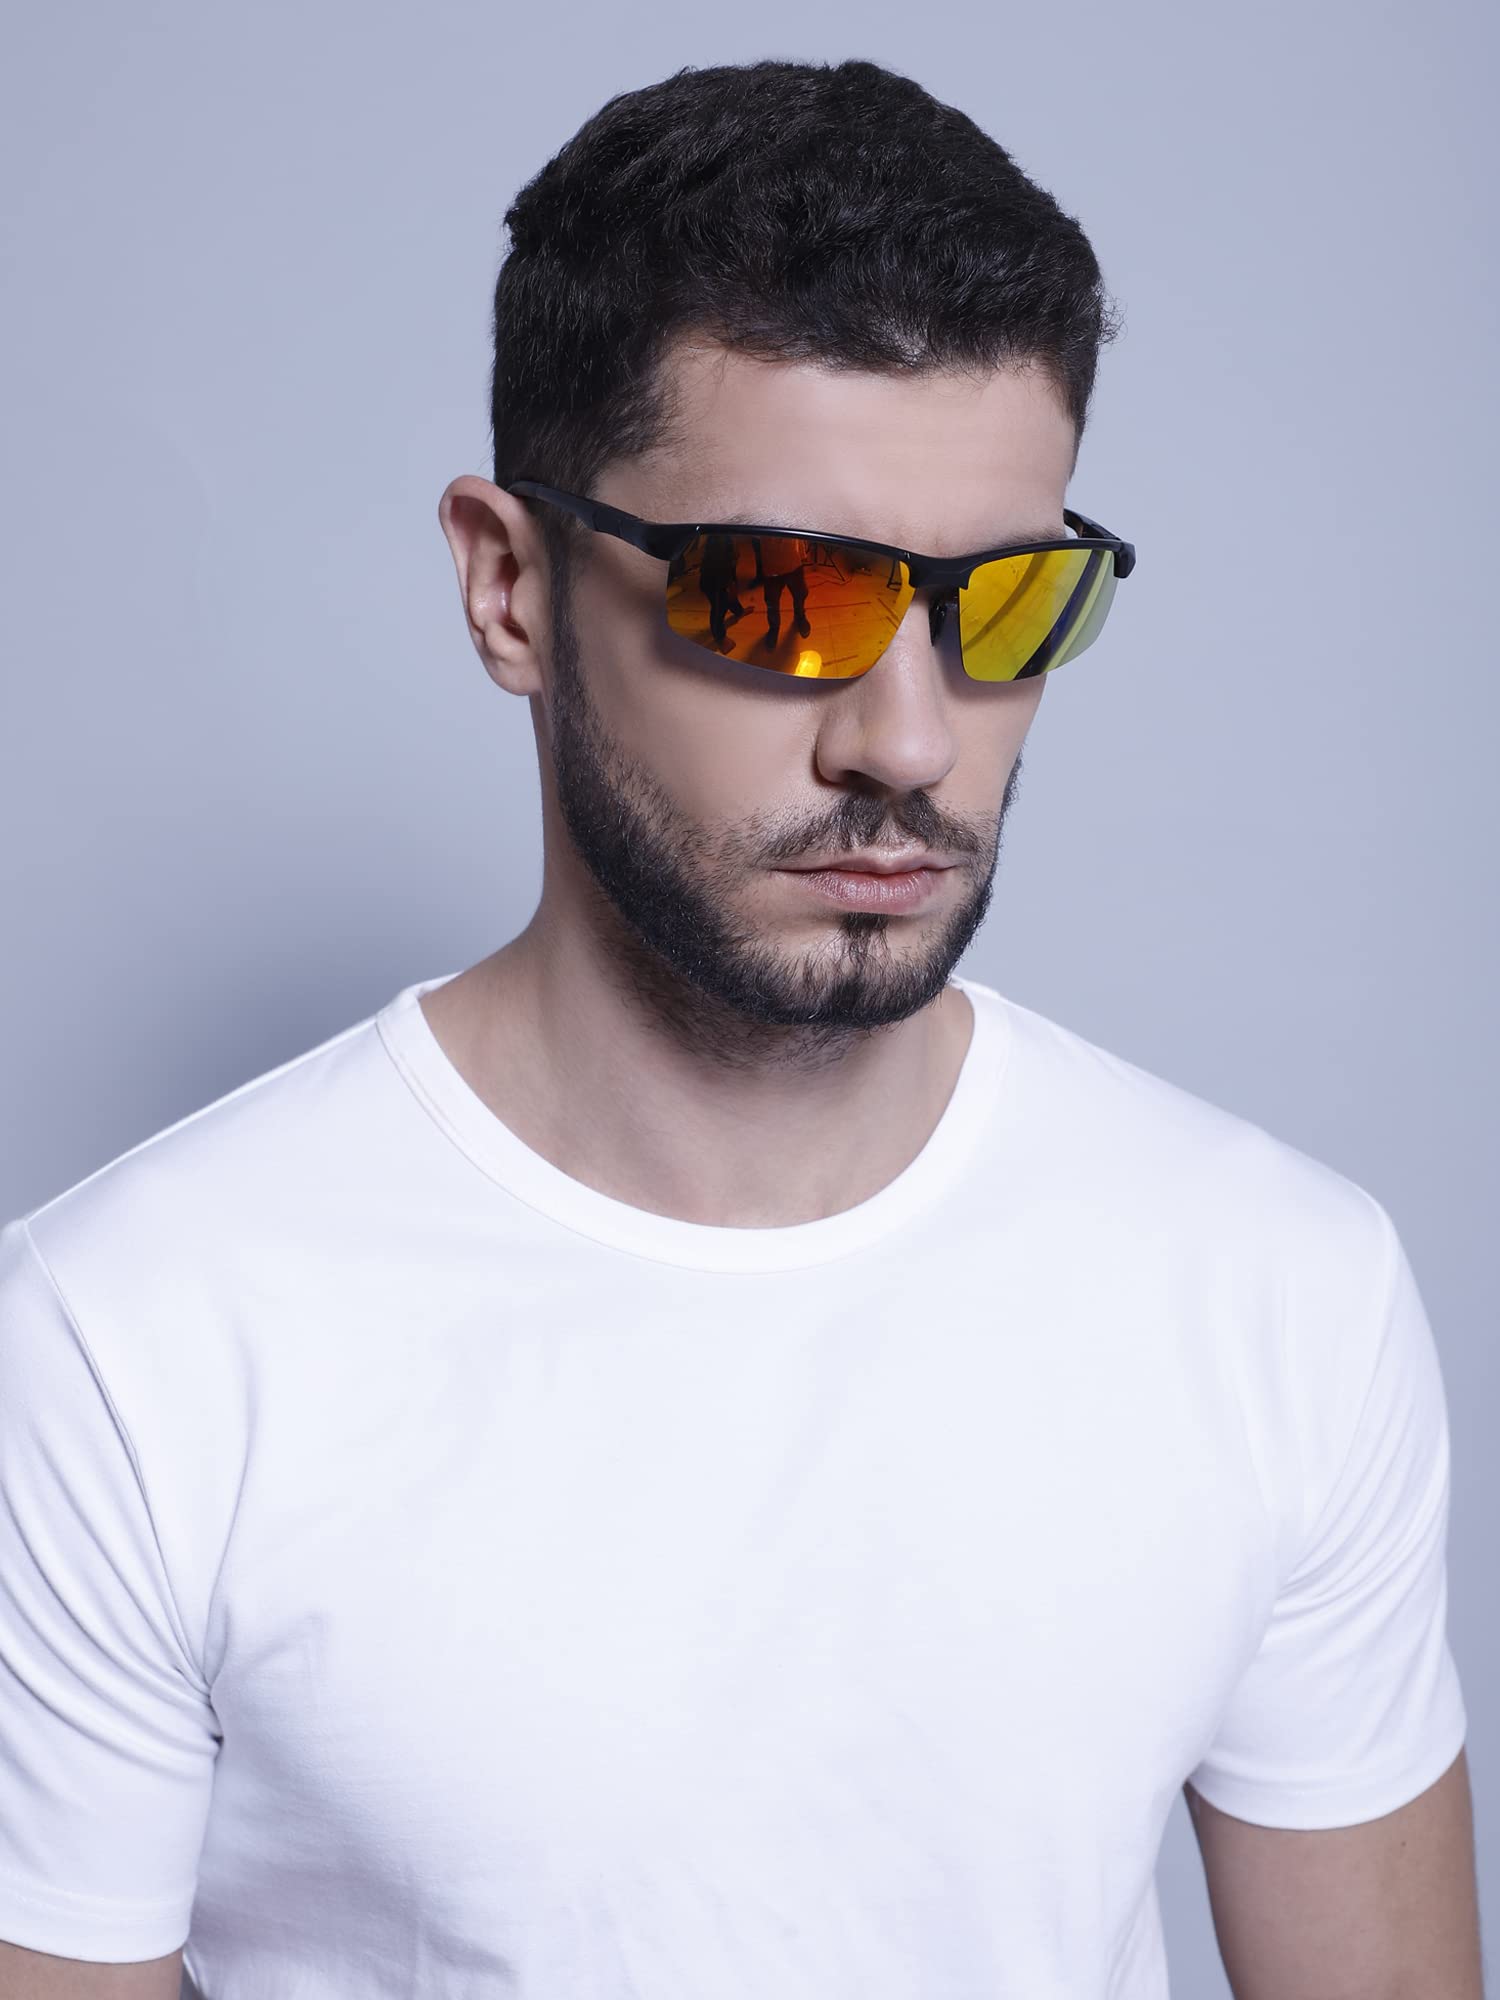 Intellilens Sports Sunglasses For Men Black - Pack of 1 – Intellilens by  GlobalBees